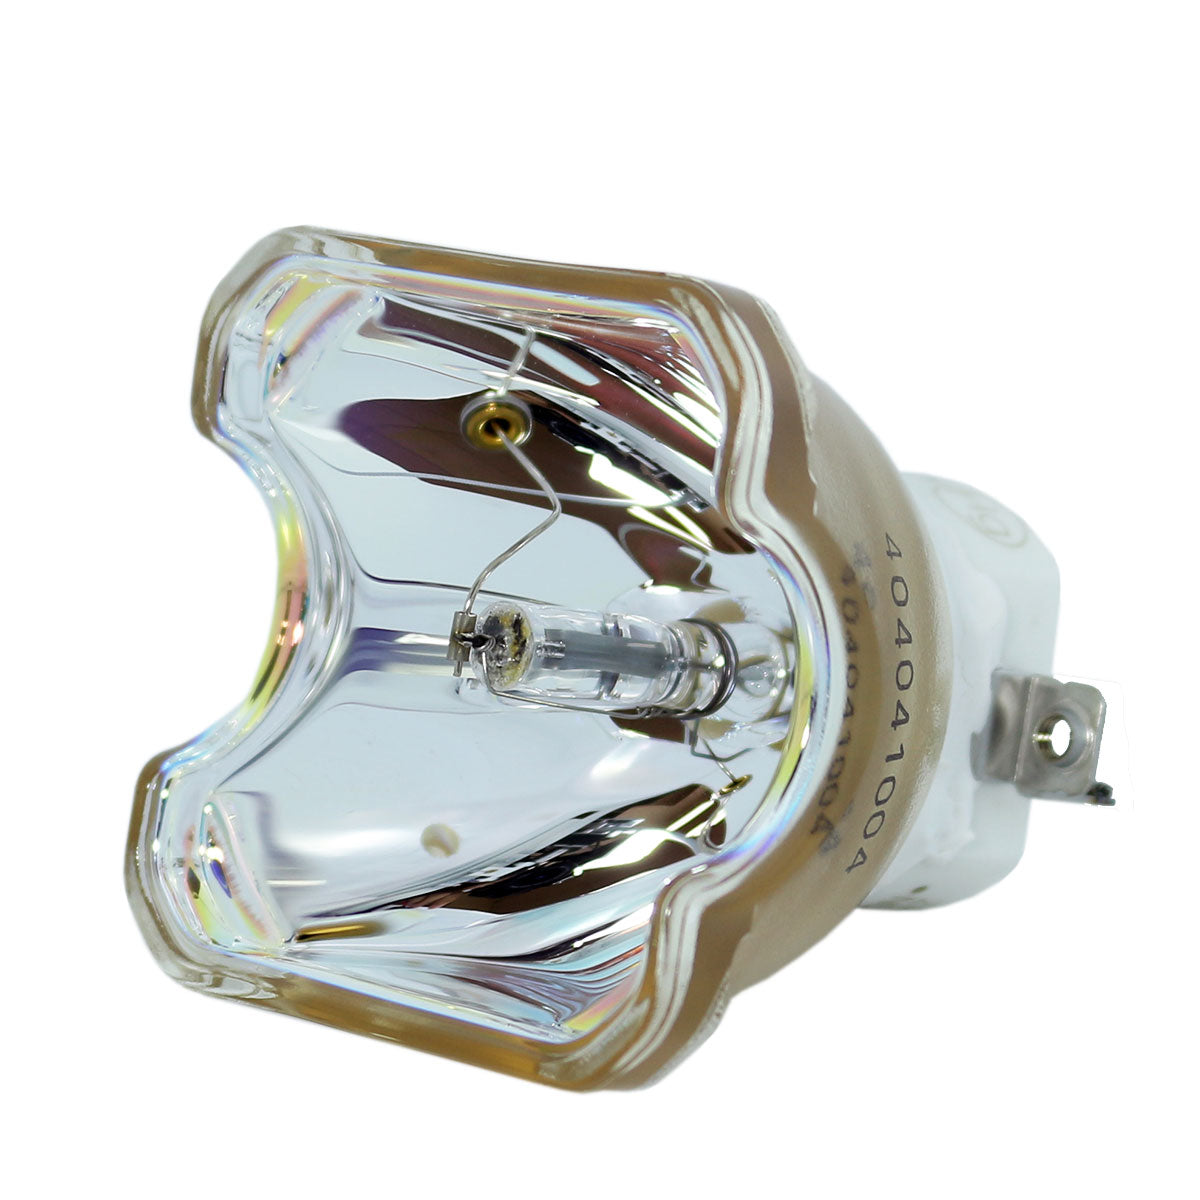 DreamVision R8760003 Ushio Projector Bare Lamp